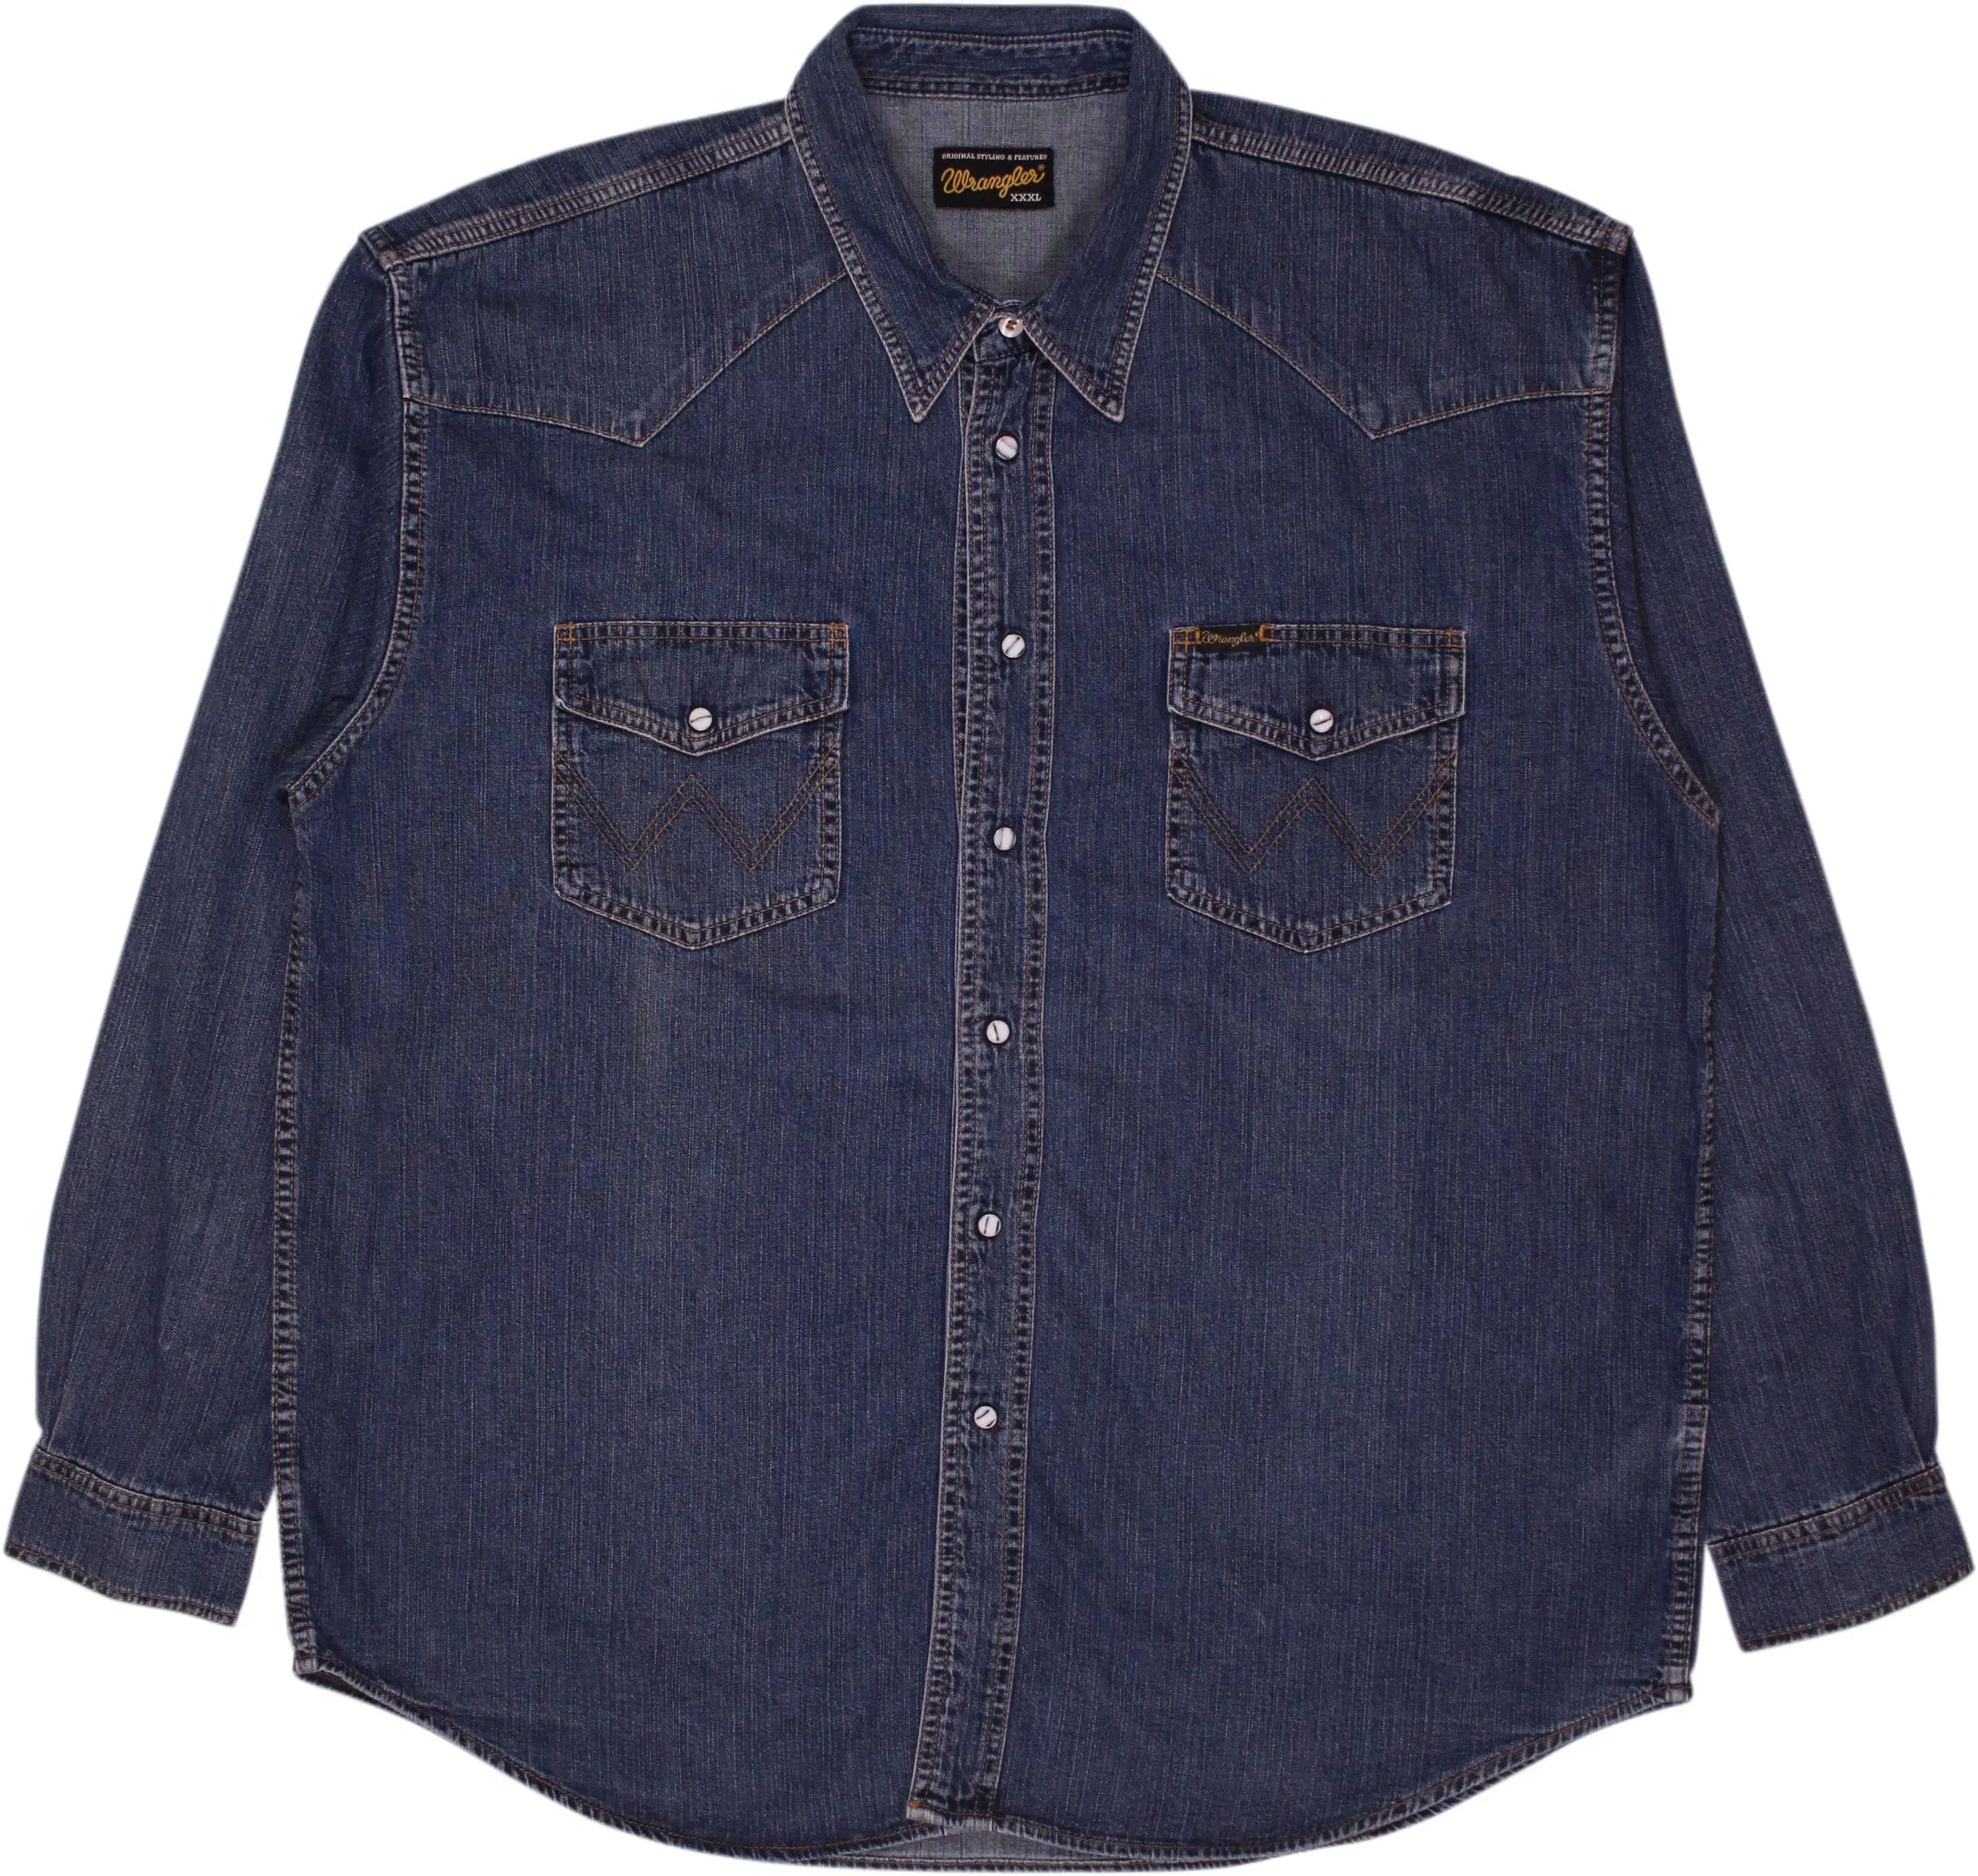 Levi's - Wrangler Denim Shirt- ThriftTale.com - Vintage and second handclothing